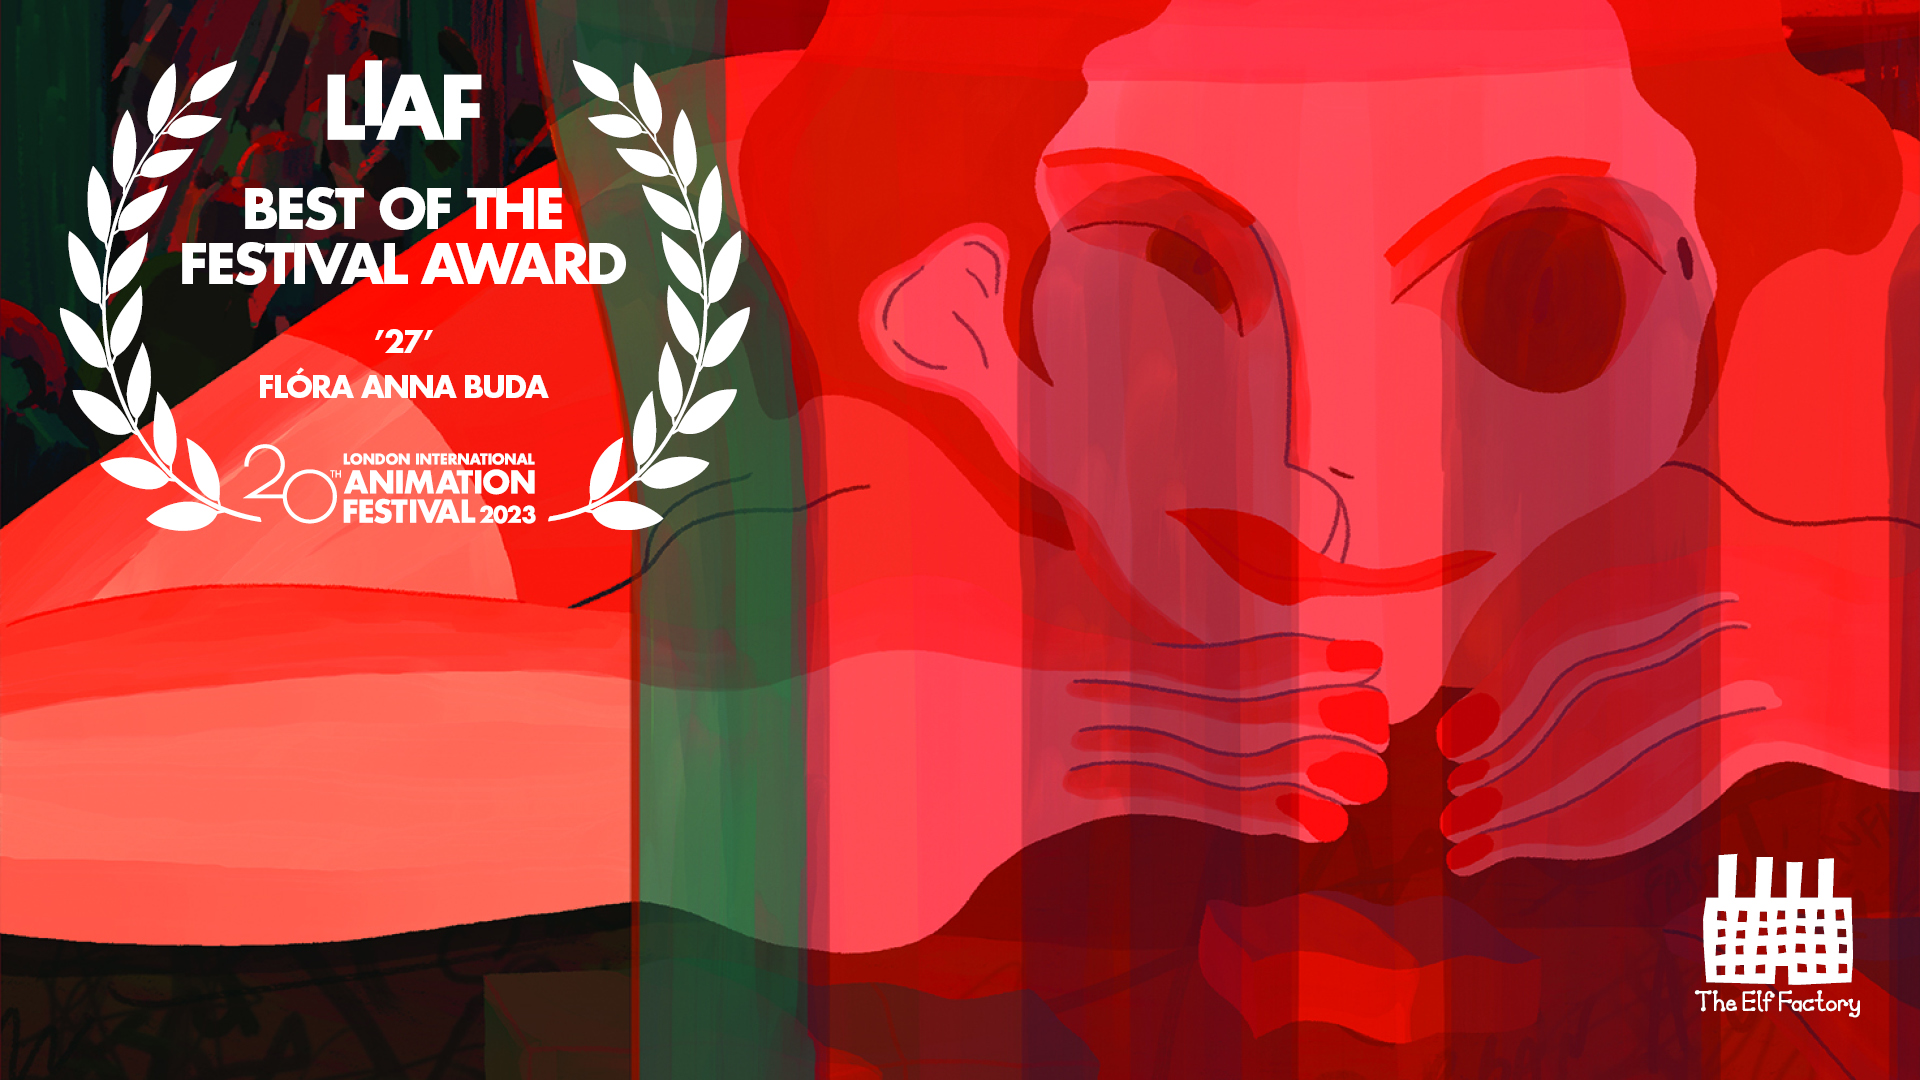 Best Film of the Festival Award, 27, Flóra Anna Buda, LIAF, London International Animation Festival